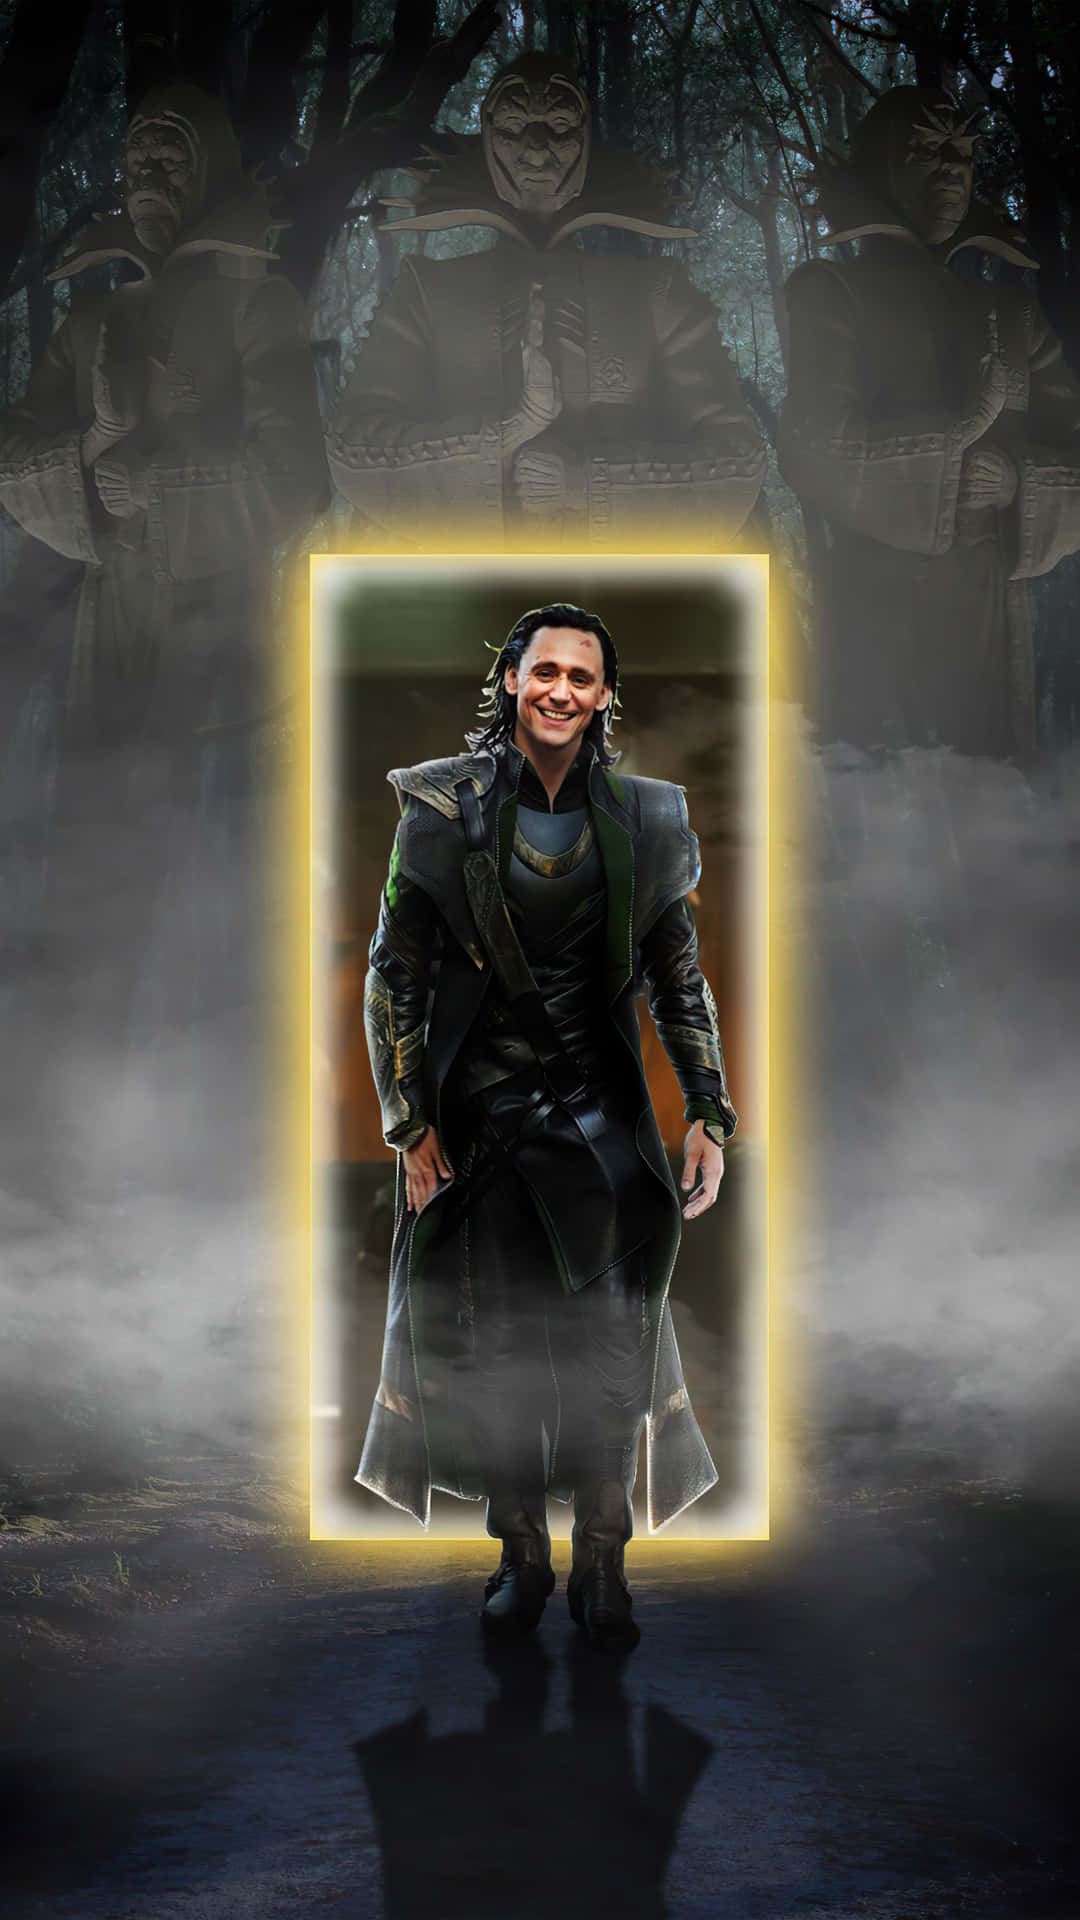 Loki makes his mark as he stands atop Mjölnir, the magical hammer of Thor.